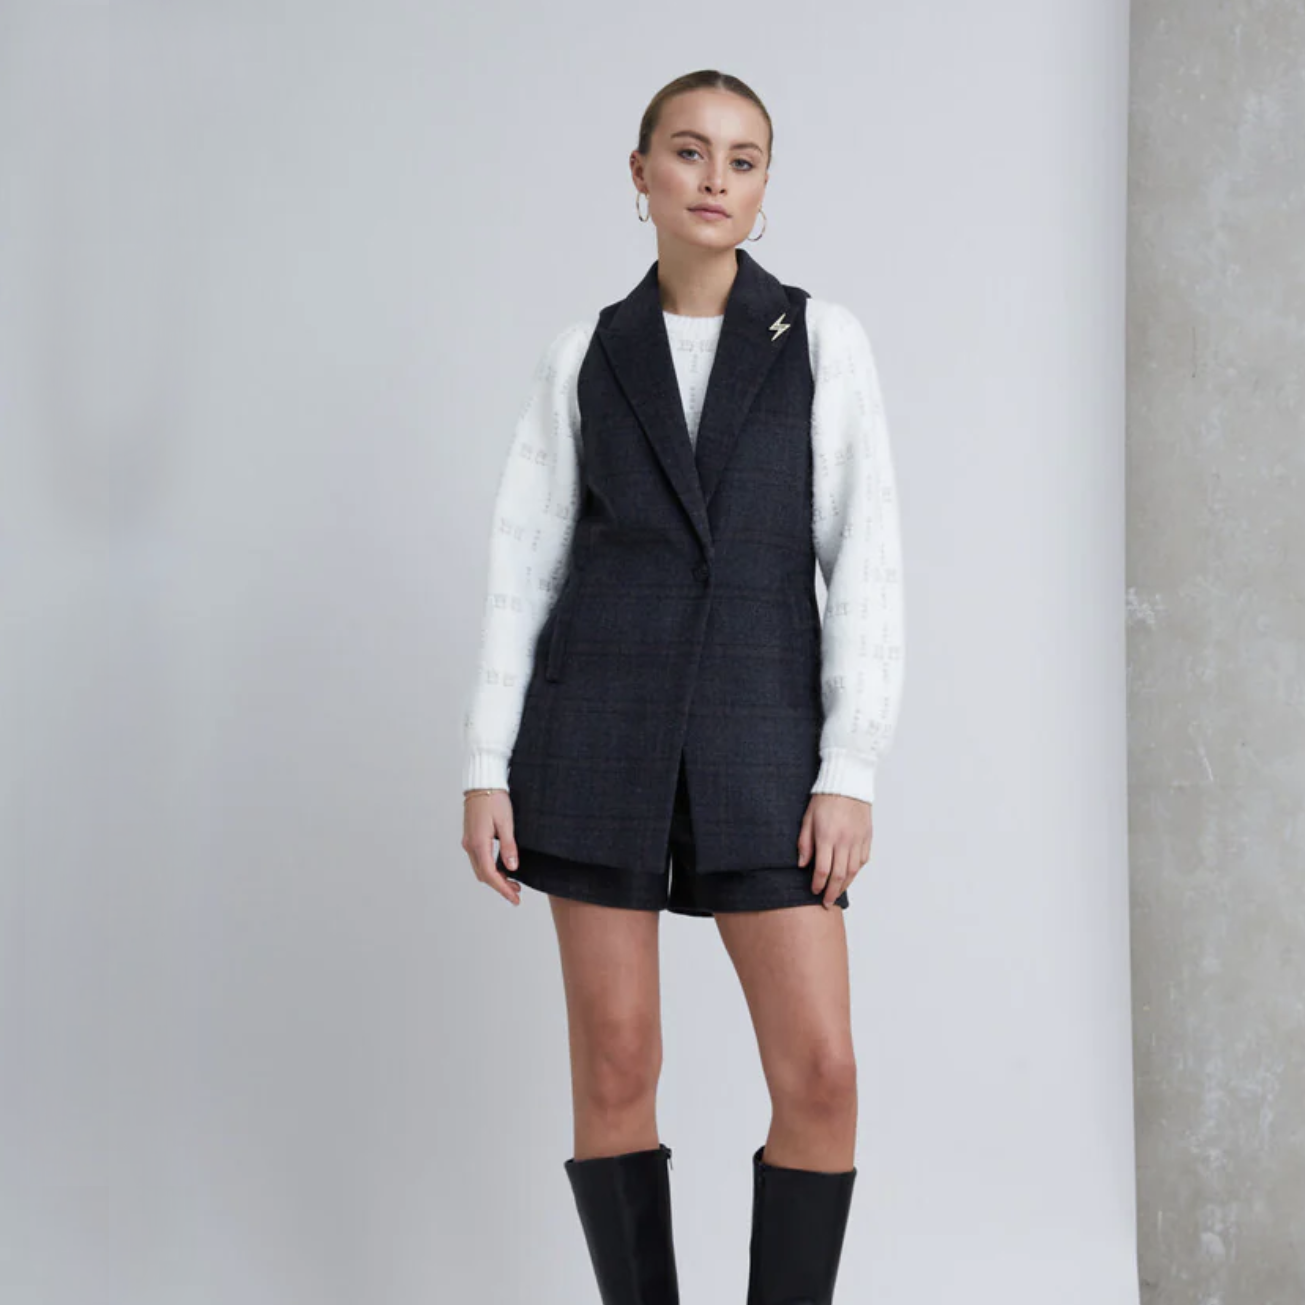 Bruuns Bazaar Lianna waistcoat - Grey Check